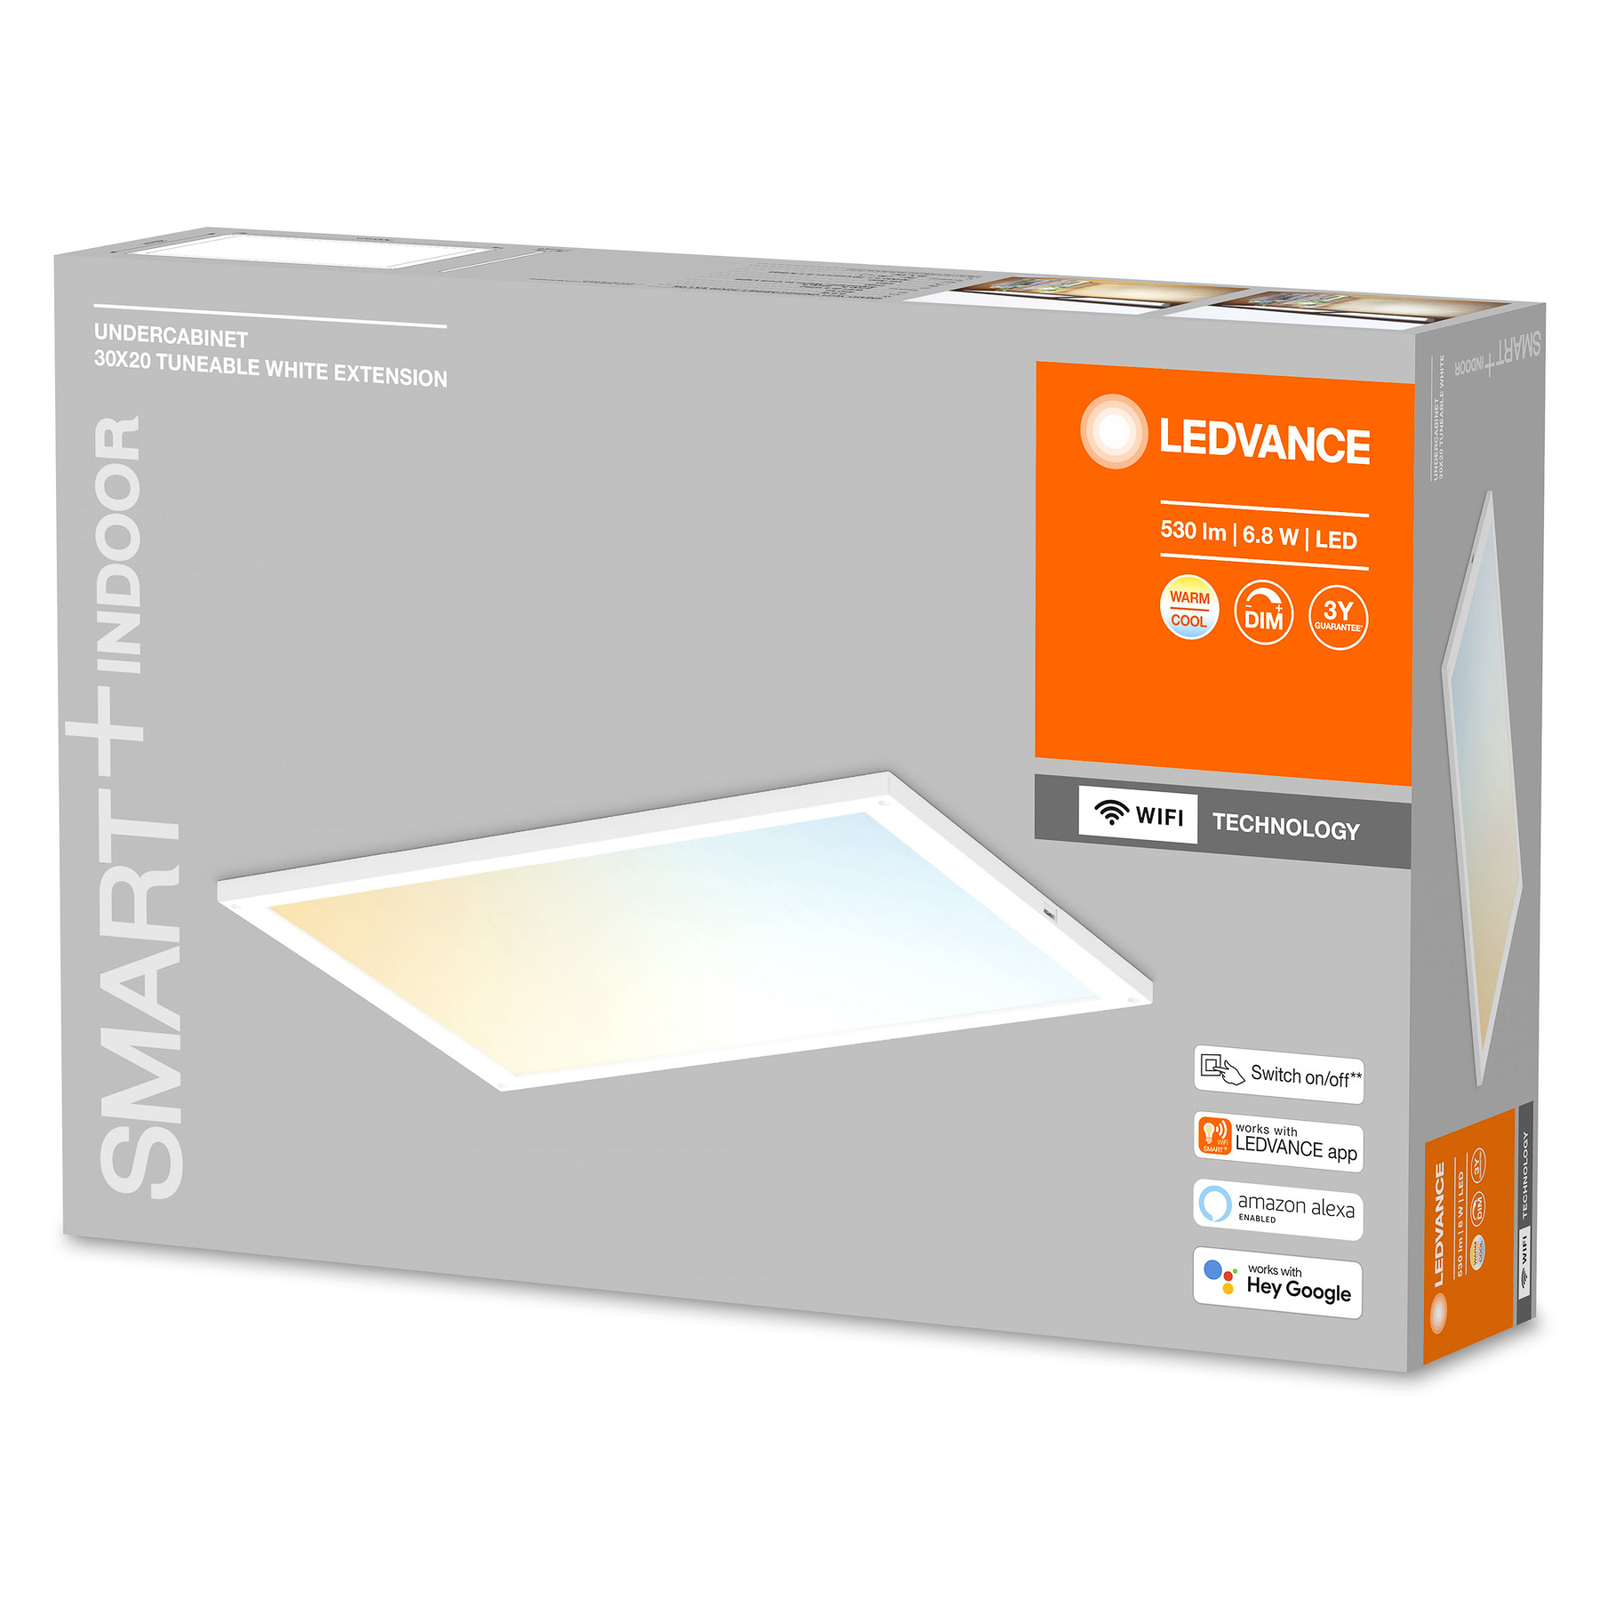 LEDVANCE SMART+WiFi Undercabinet 30x20 utvidgning